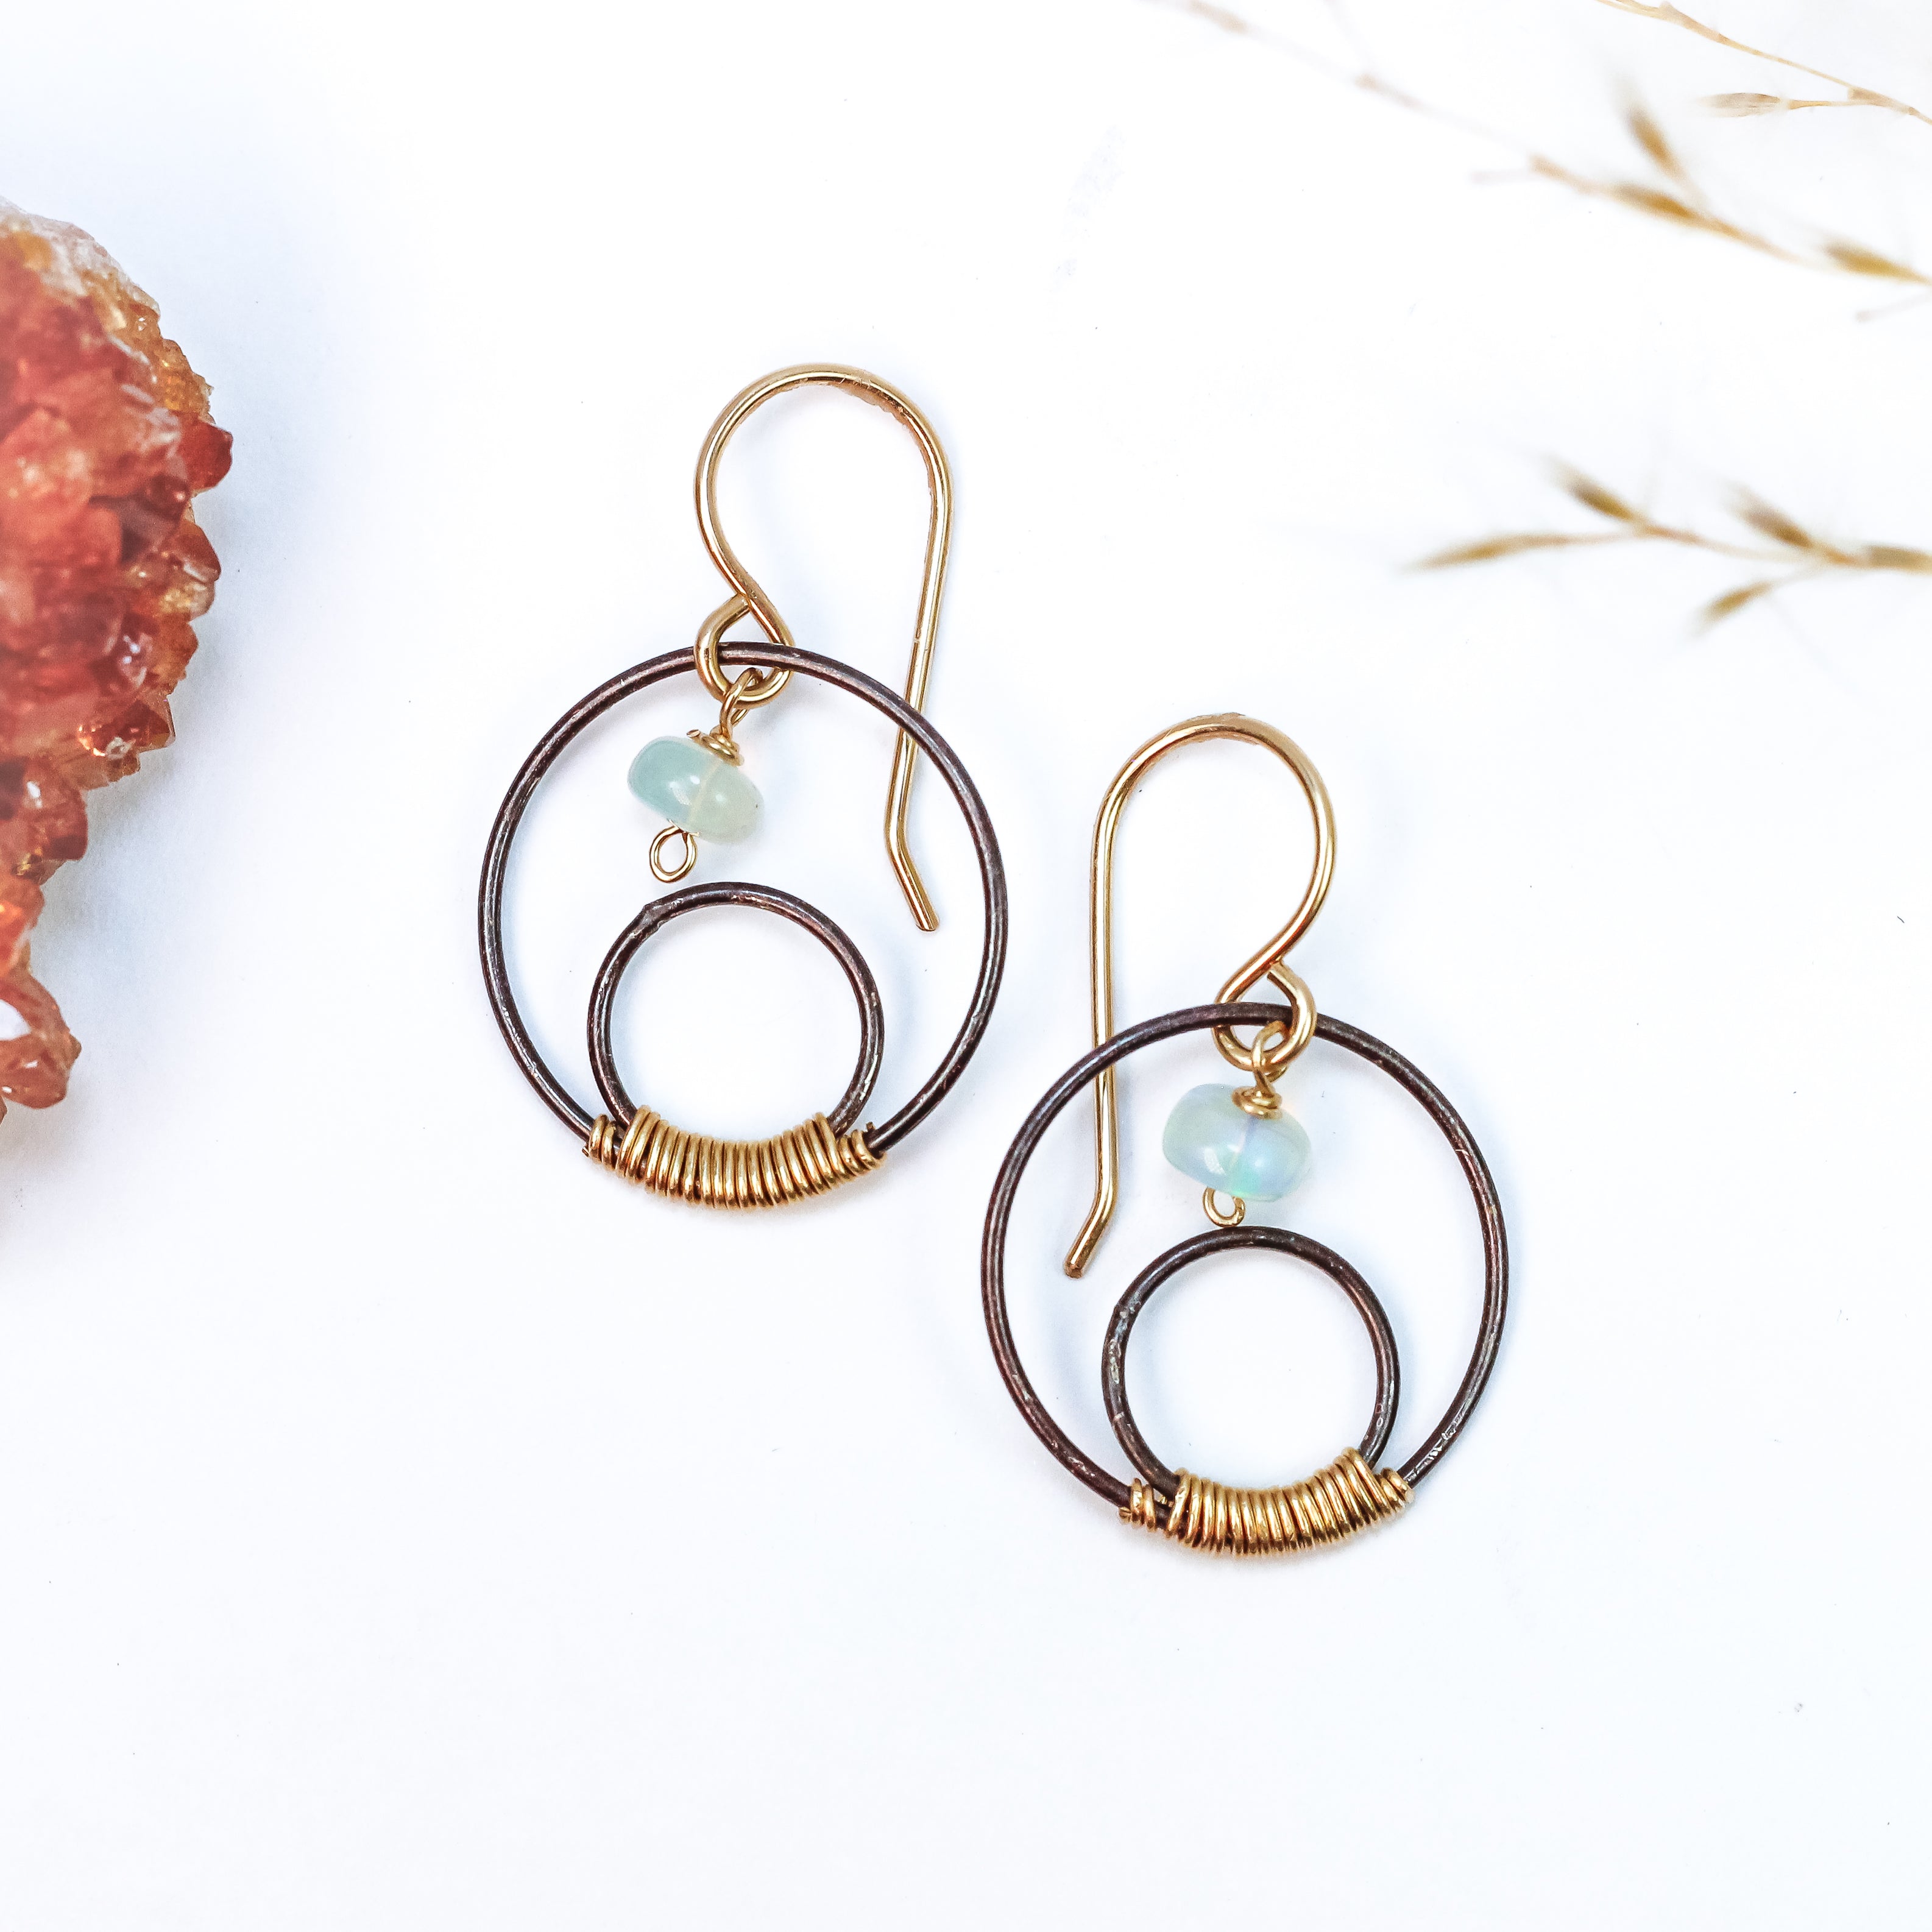 handmade oxidized silver gold filled mixed metal opal gemstone earrings laura j designs